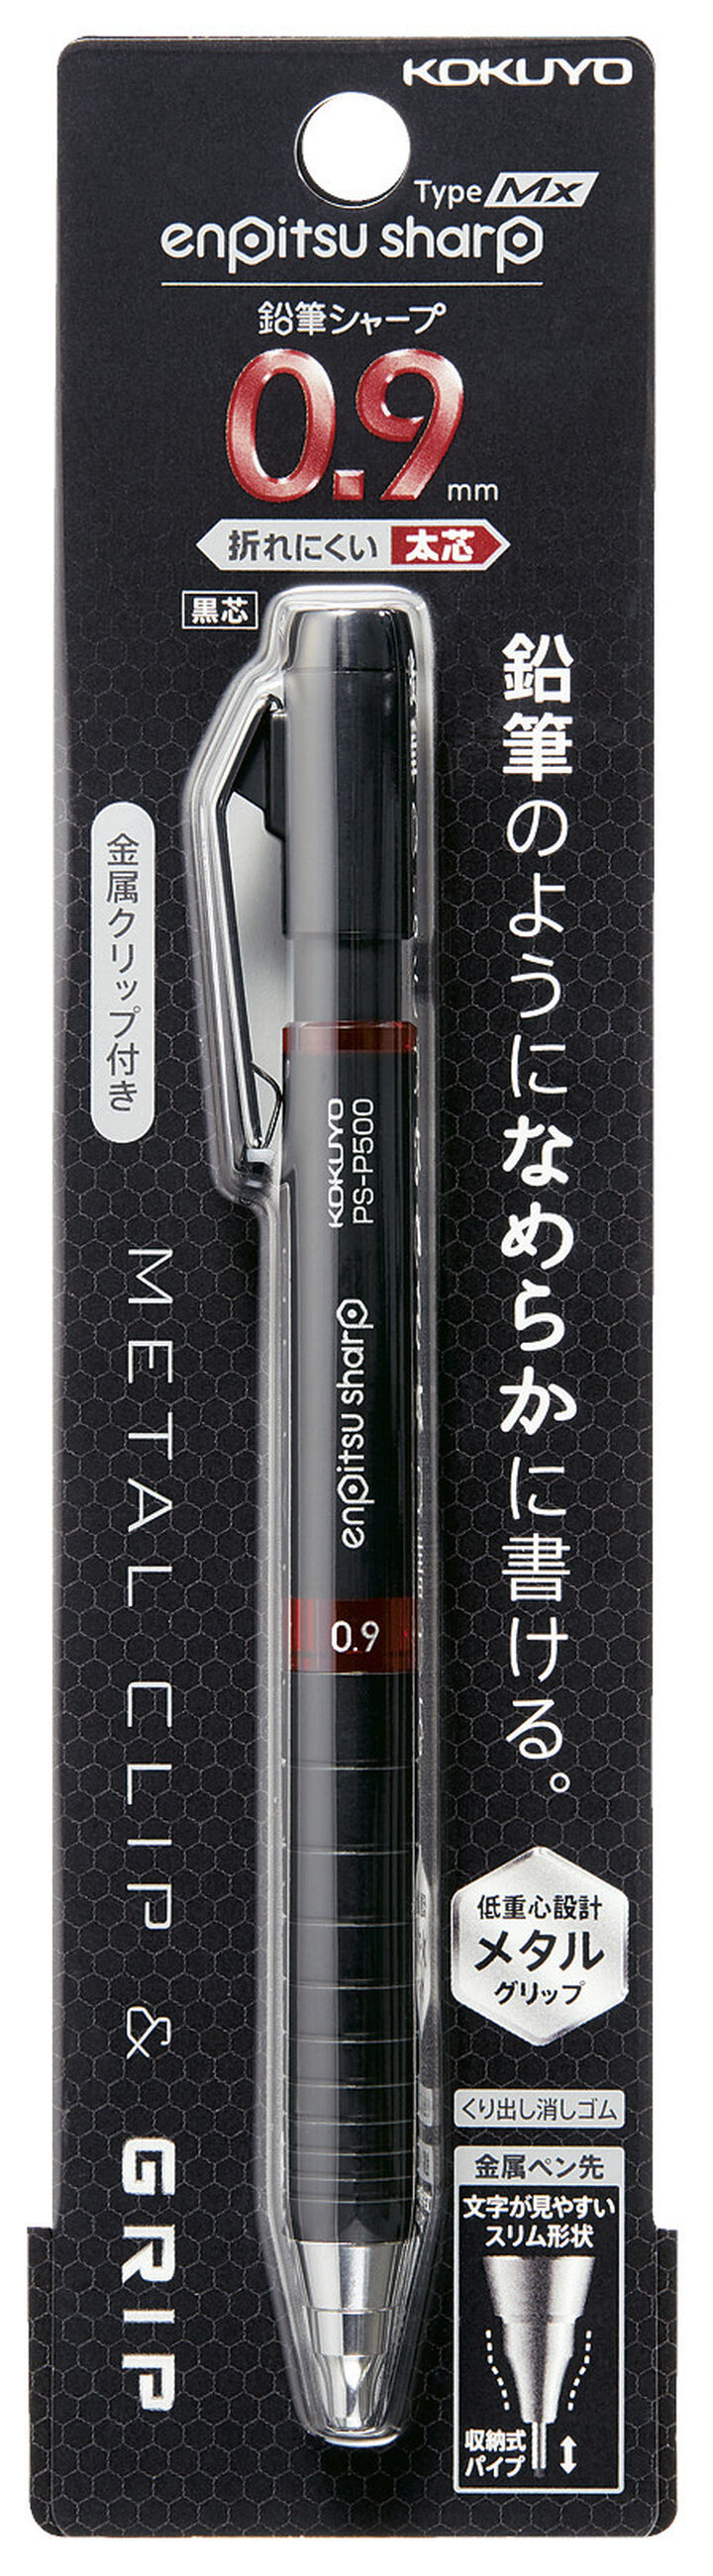 Enpitsu sharp mechanical pencil TypeM 0.9mm Metal Grip,Red, medium